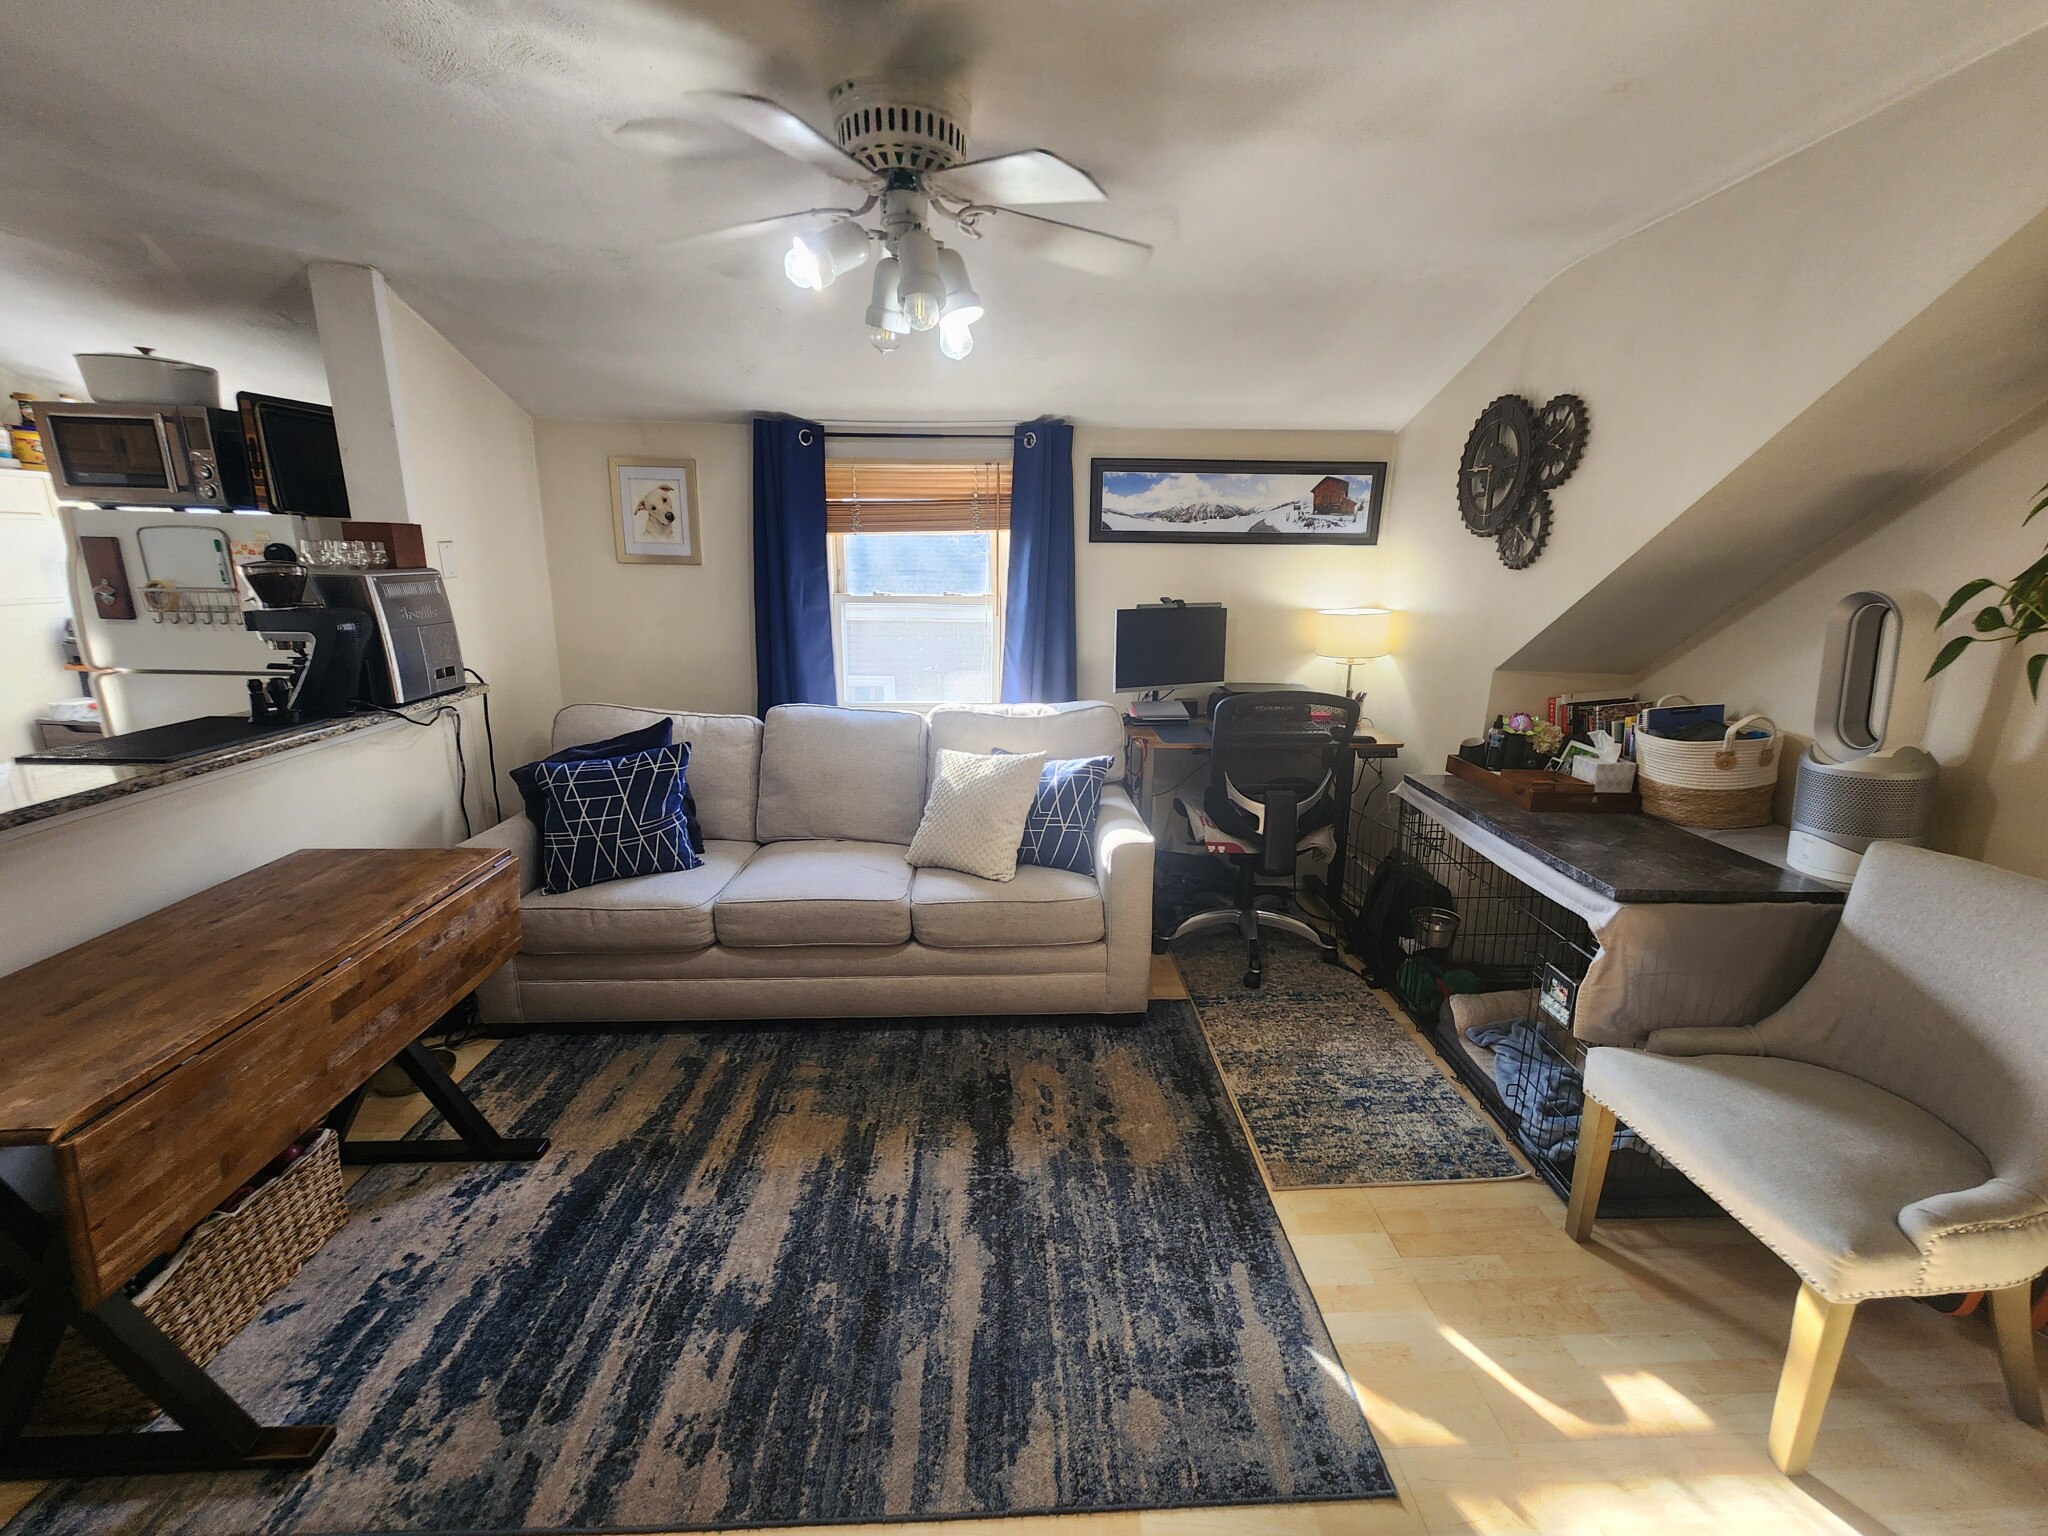 Photos of apartment on Webley,Boston MA 02134